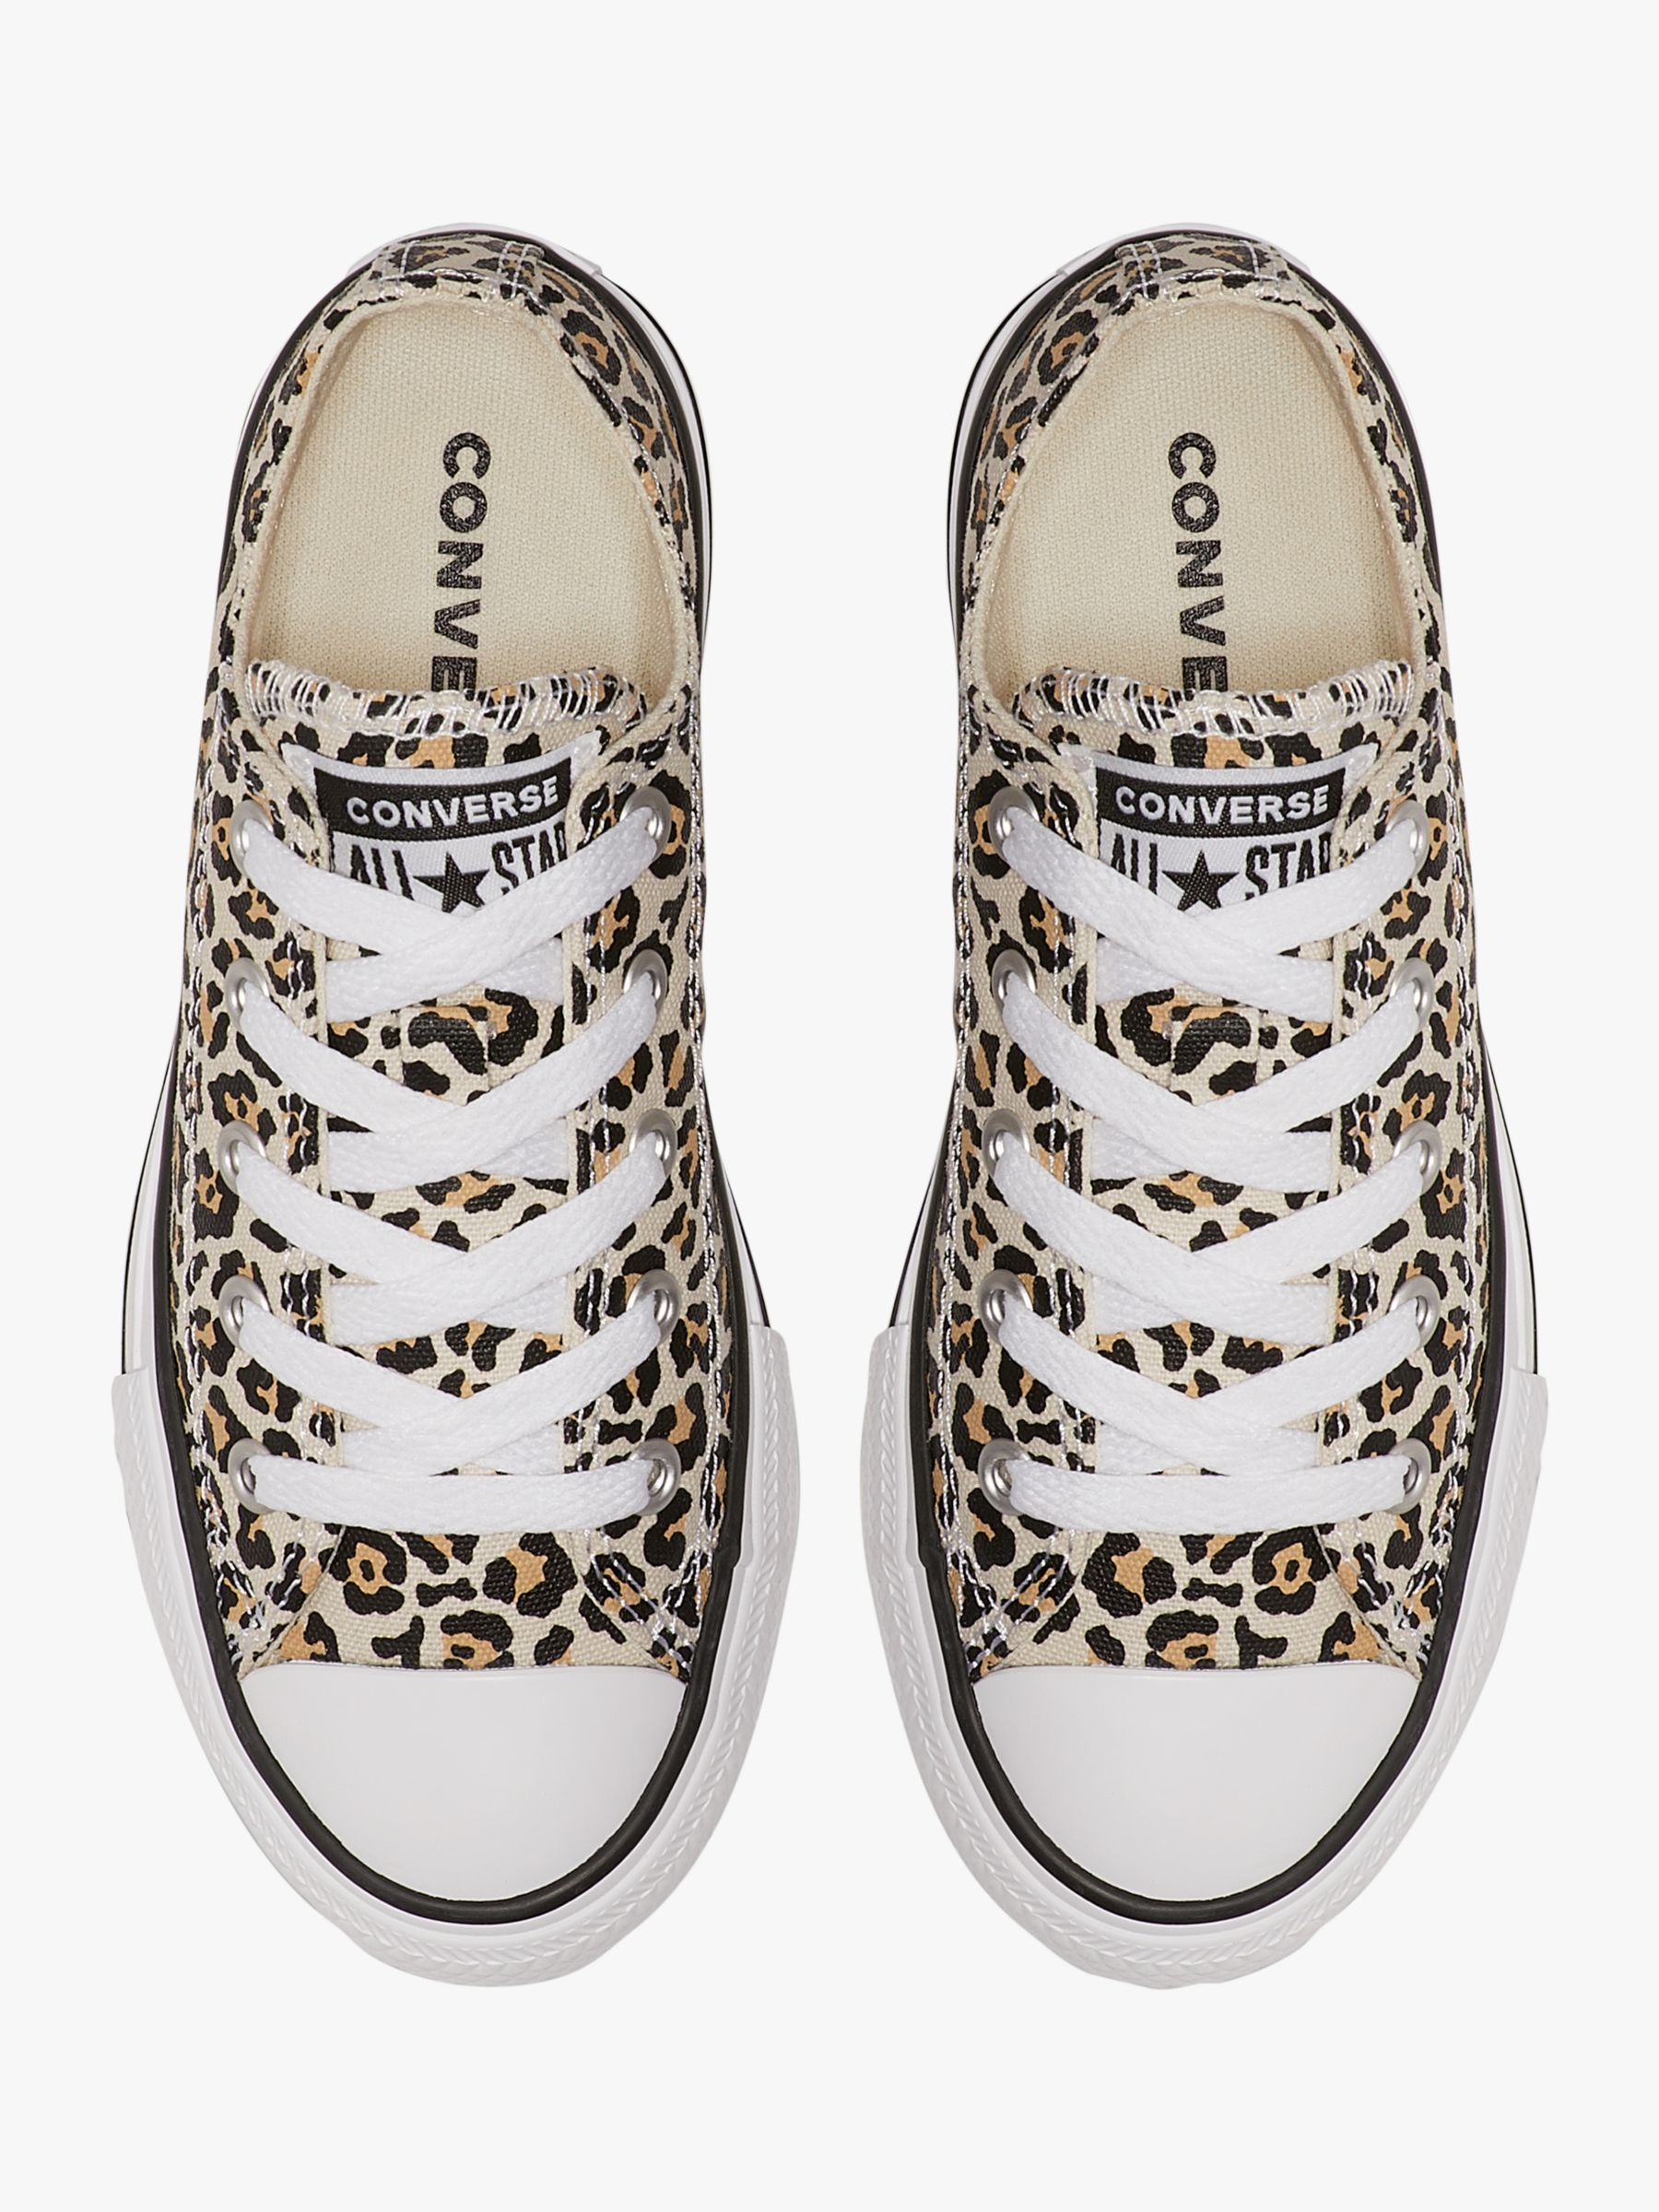 converse trainers leopard print